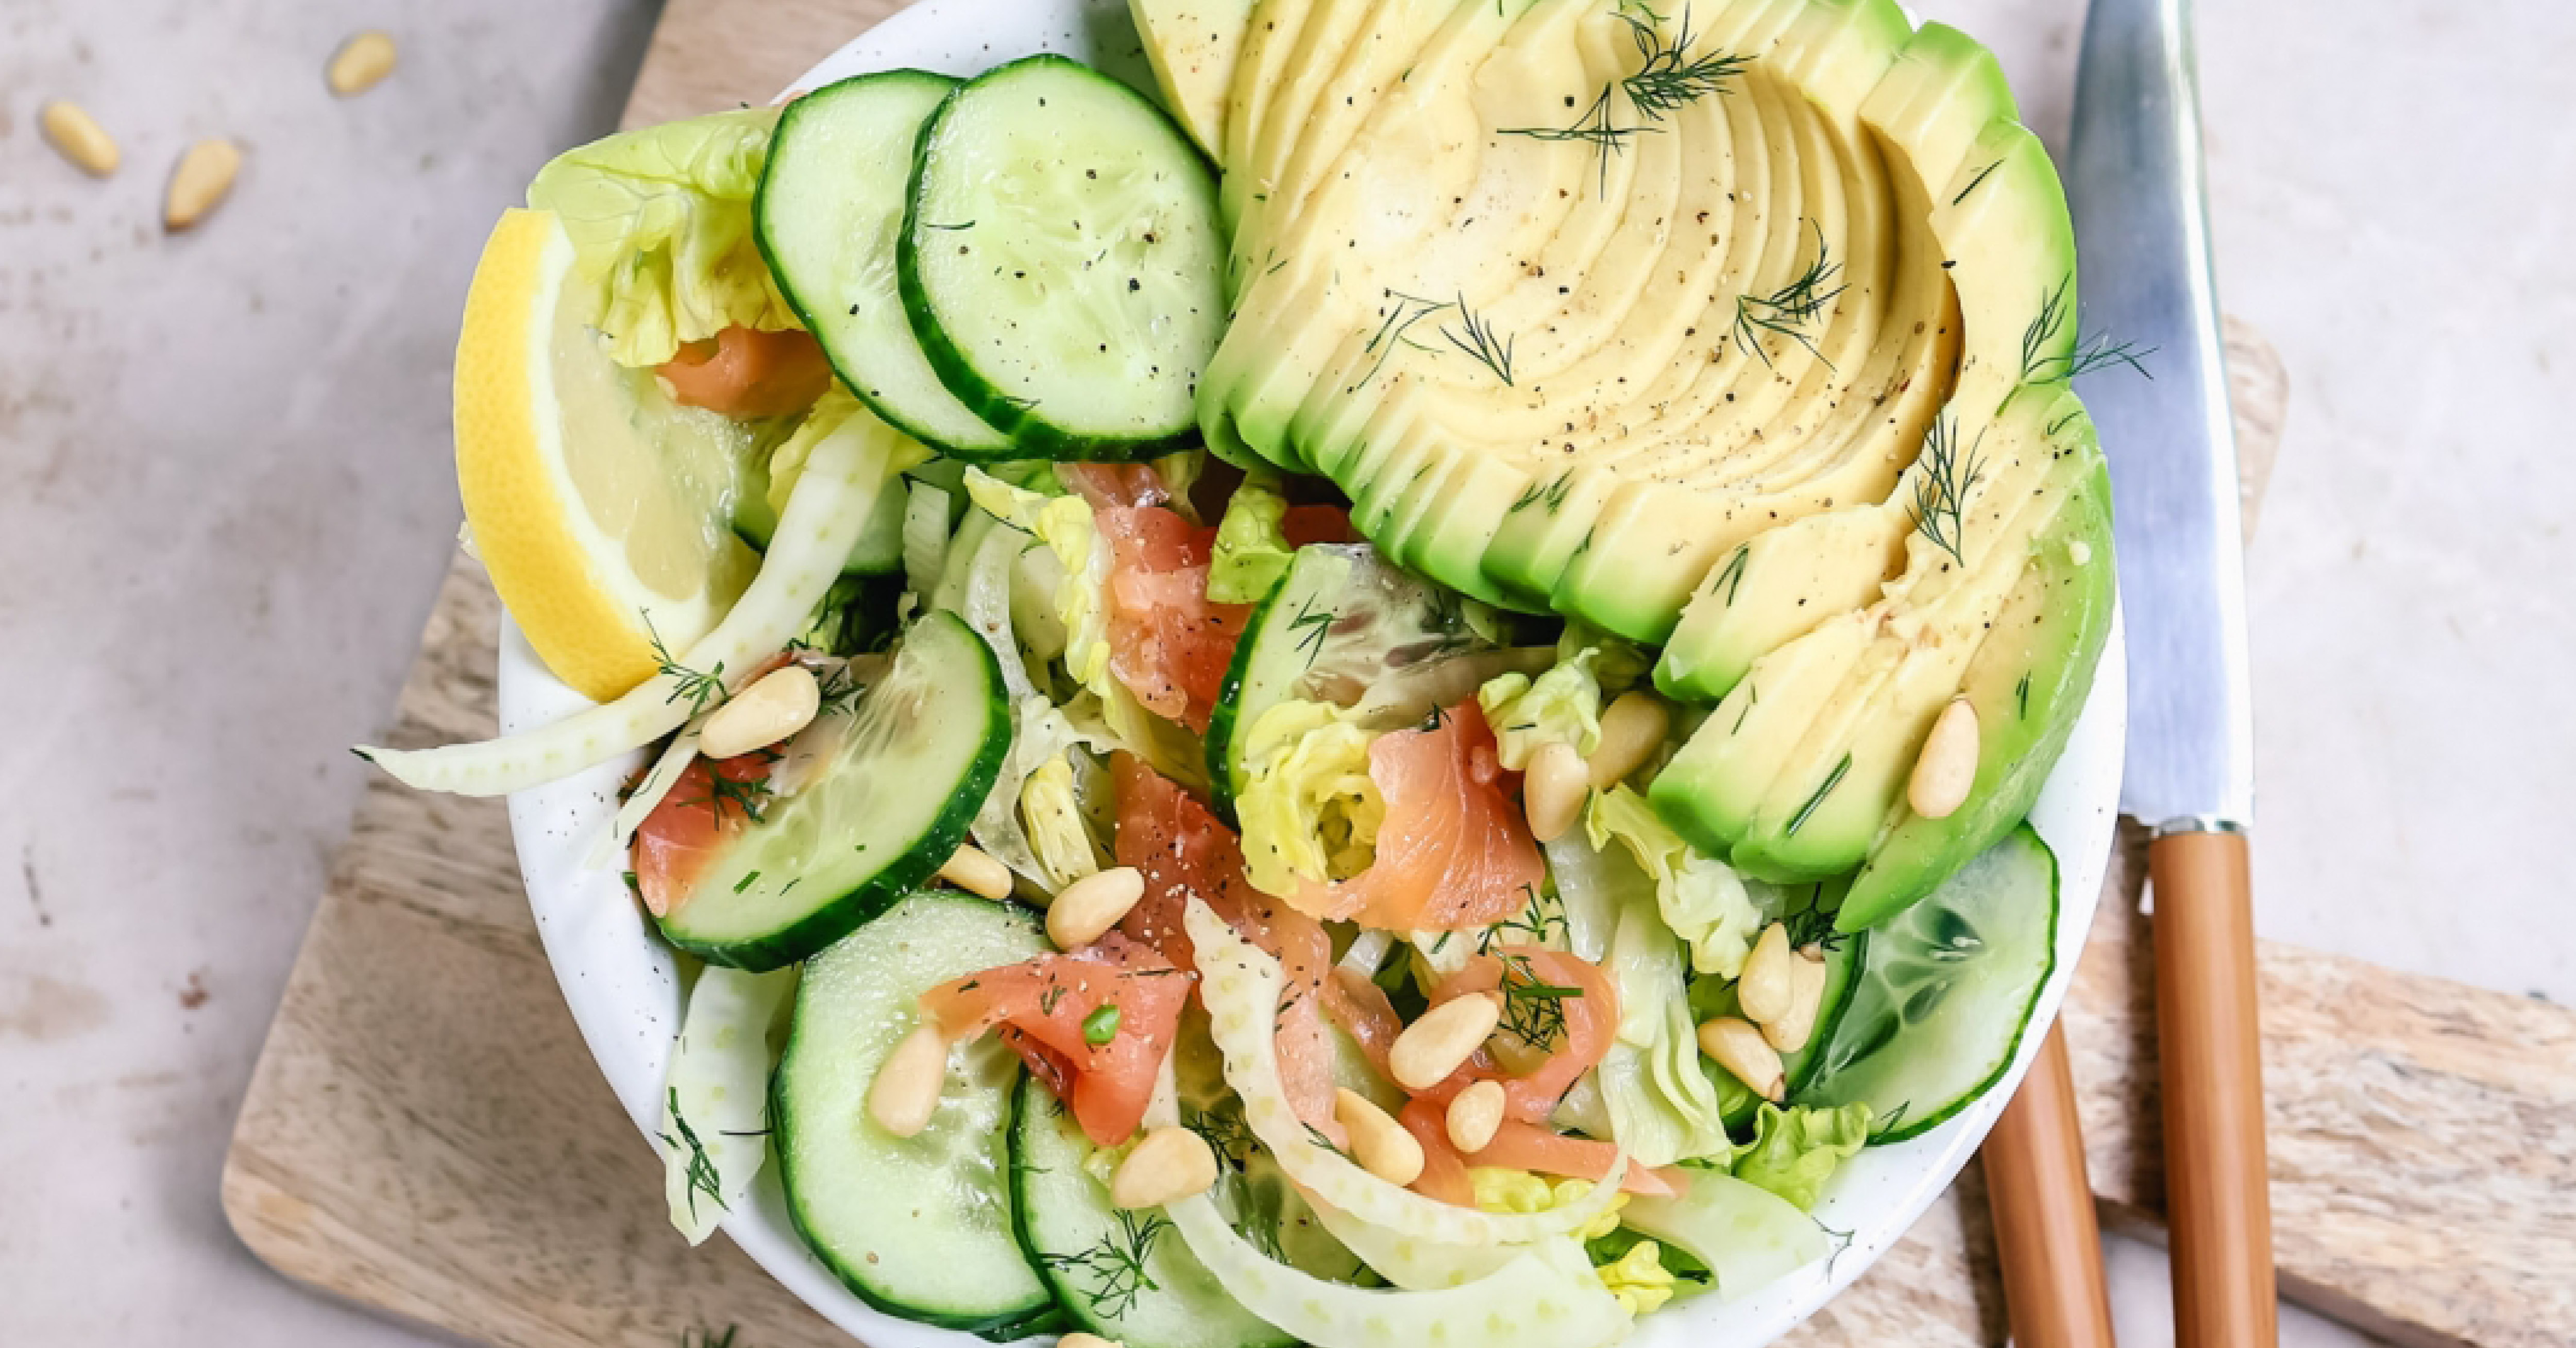 Salade met venkel, gerookte zalm & avocado (499 kcal)